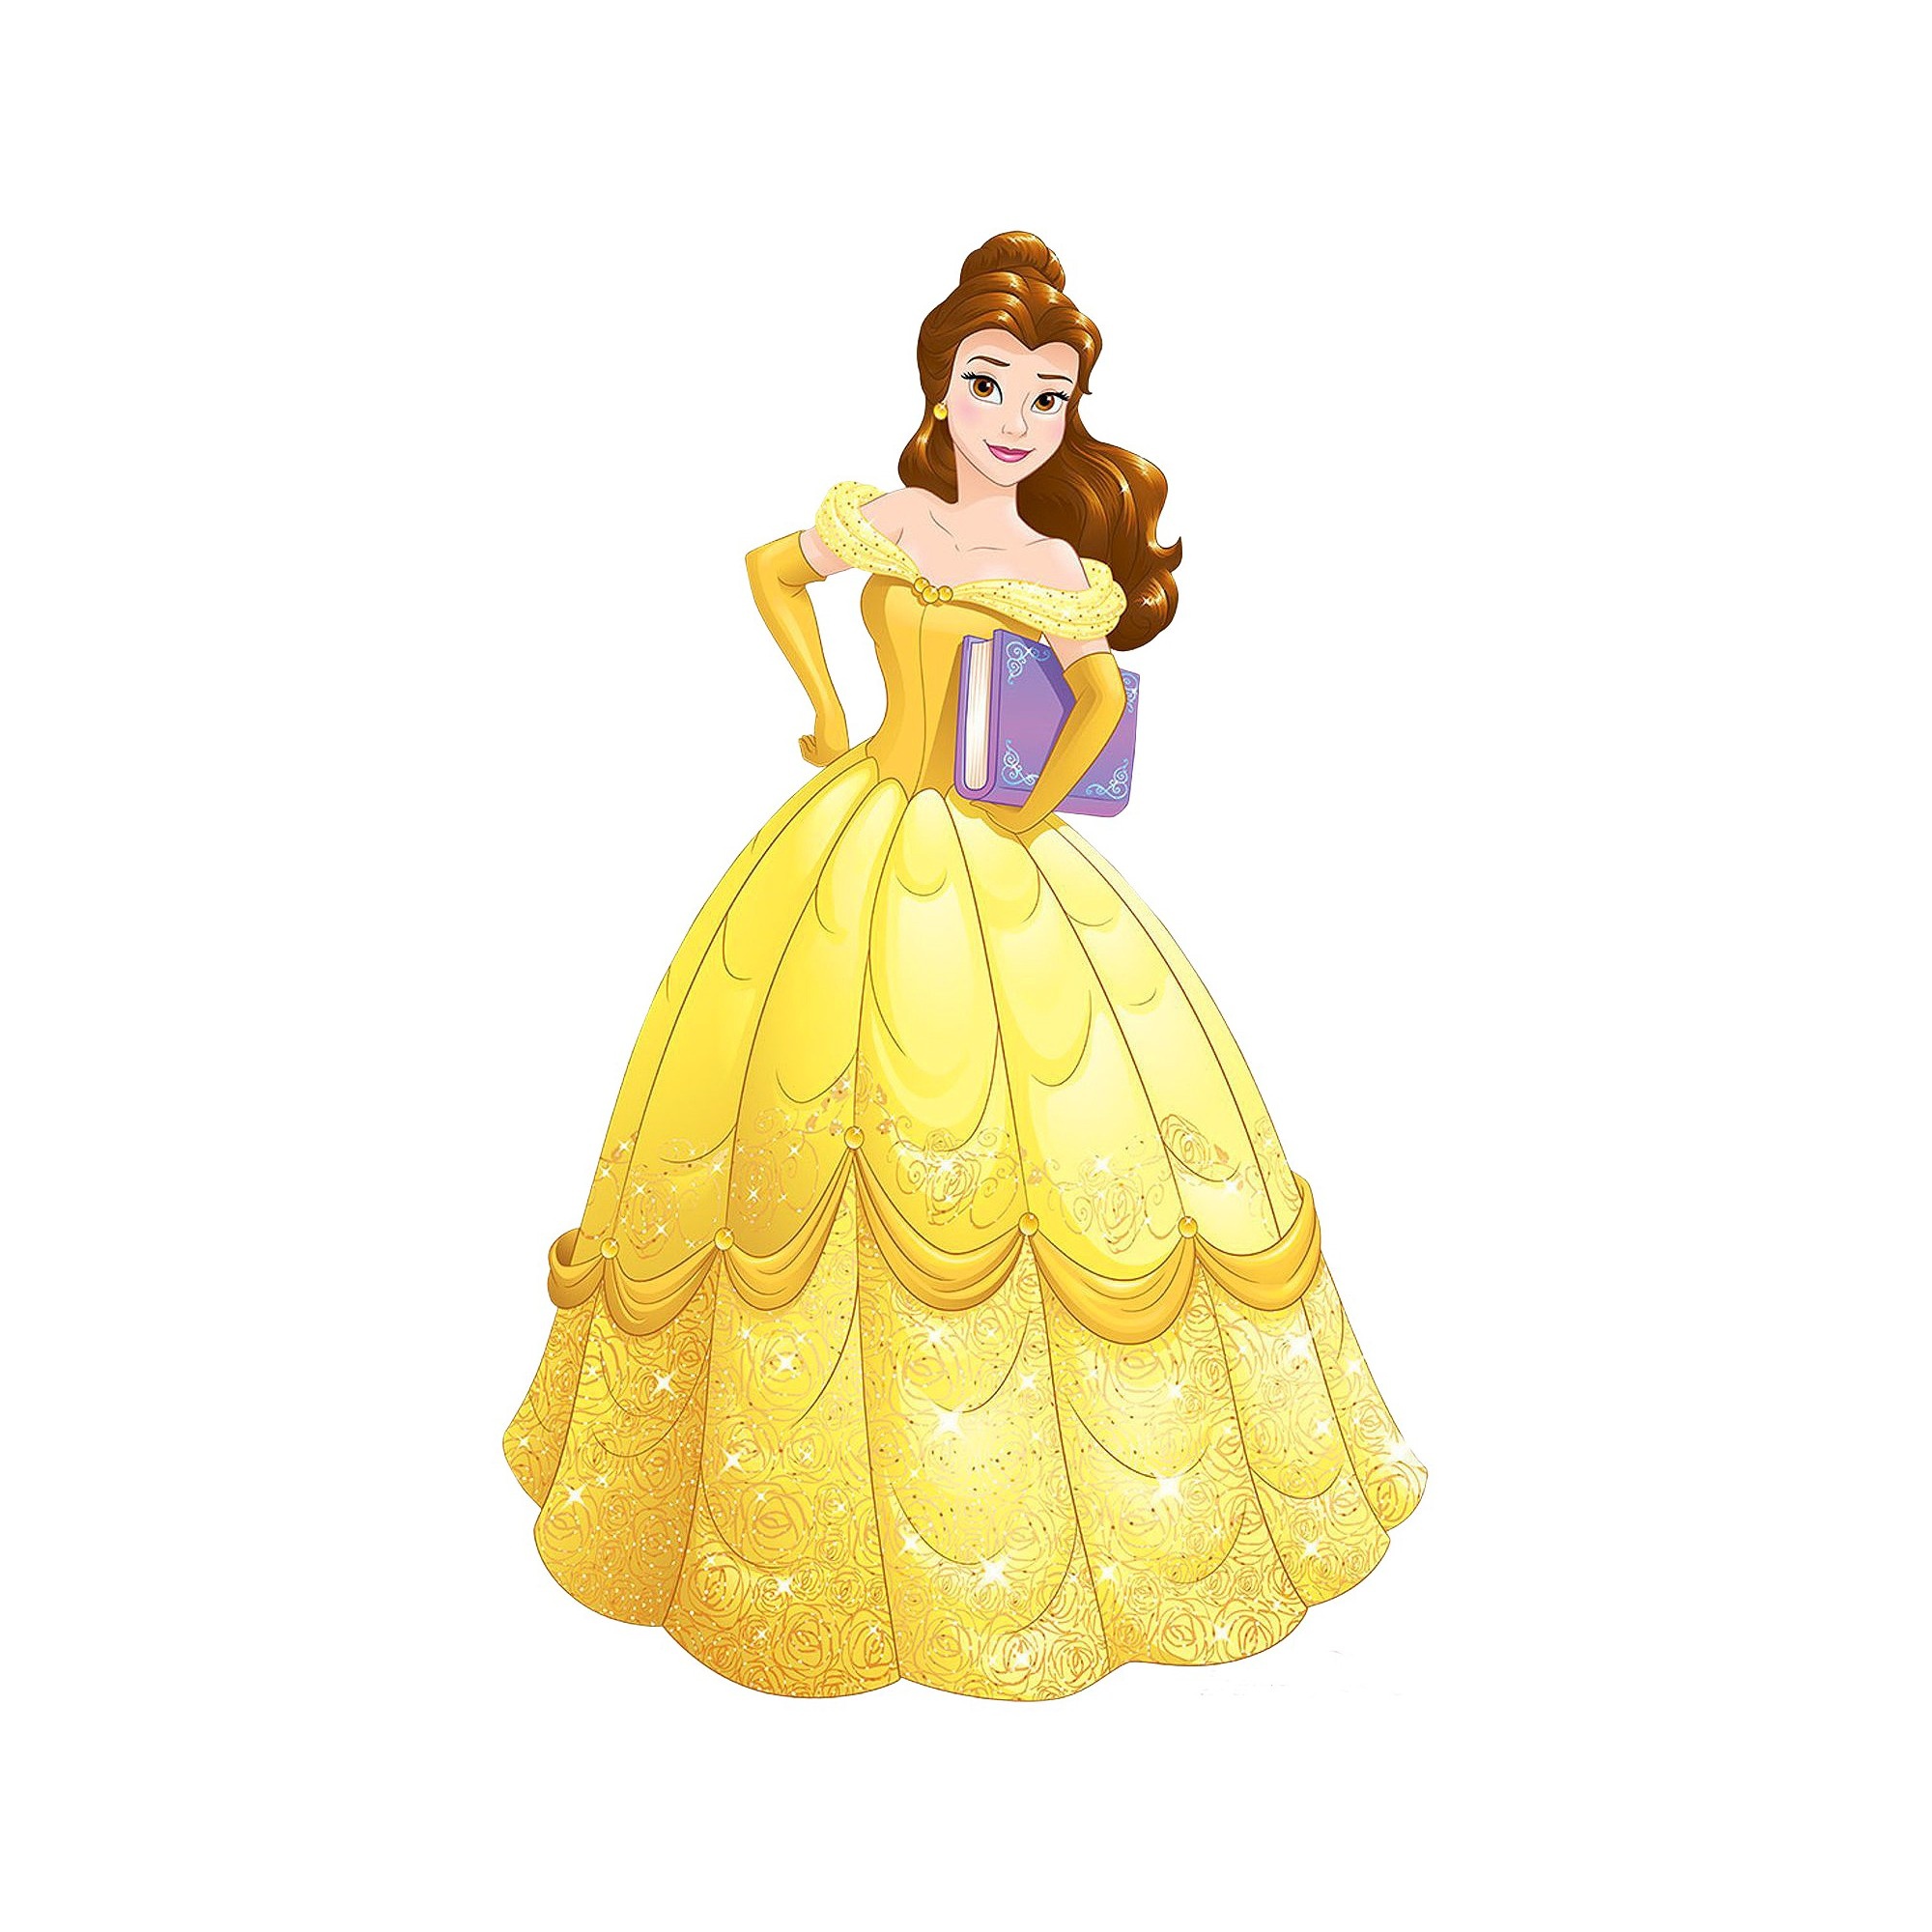 Без принцесс. Белль (Дисней). Красавица и чудовище Дисней Белль. Платье принцессы Бэлль (Бэль) Disney. Красавица и чудовище принцесса Белль.